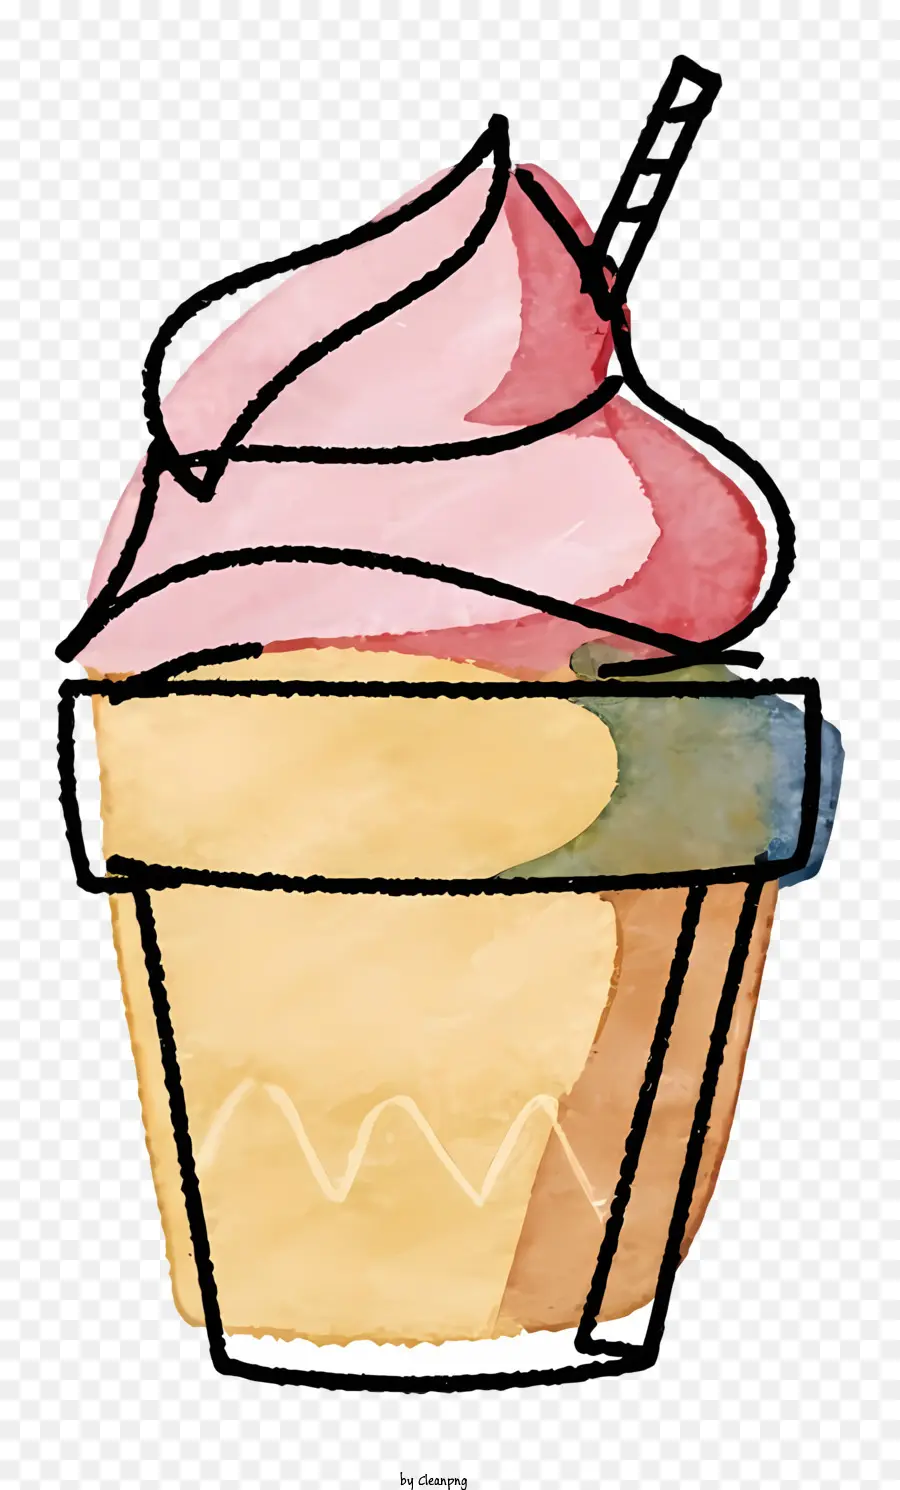 cupcake pink frosting white sprinkles swirl straw